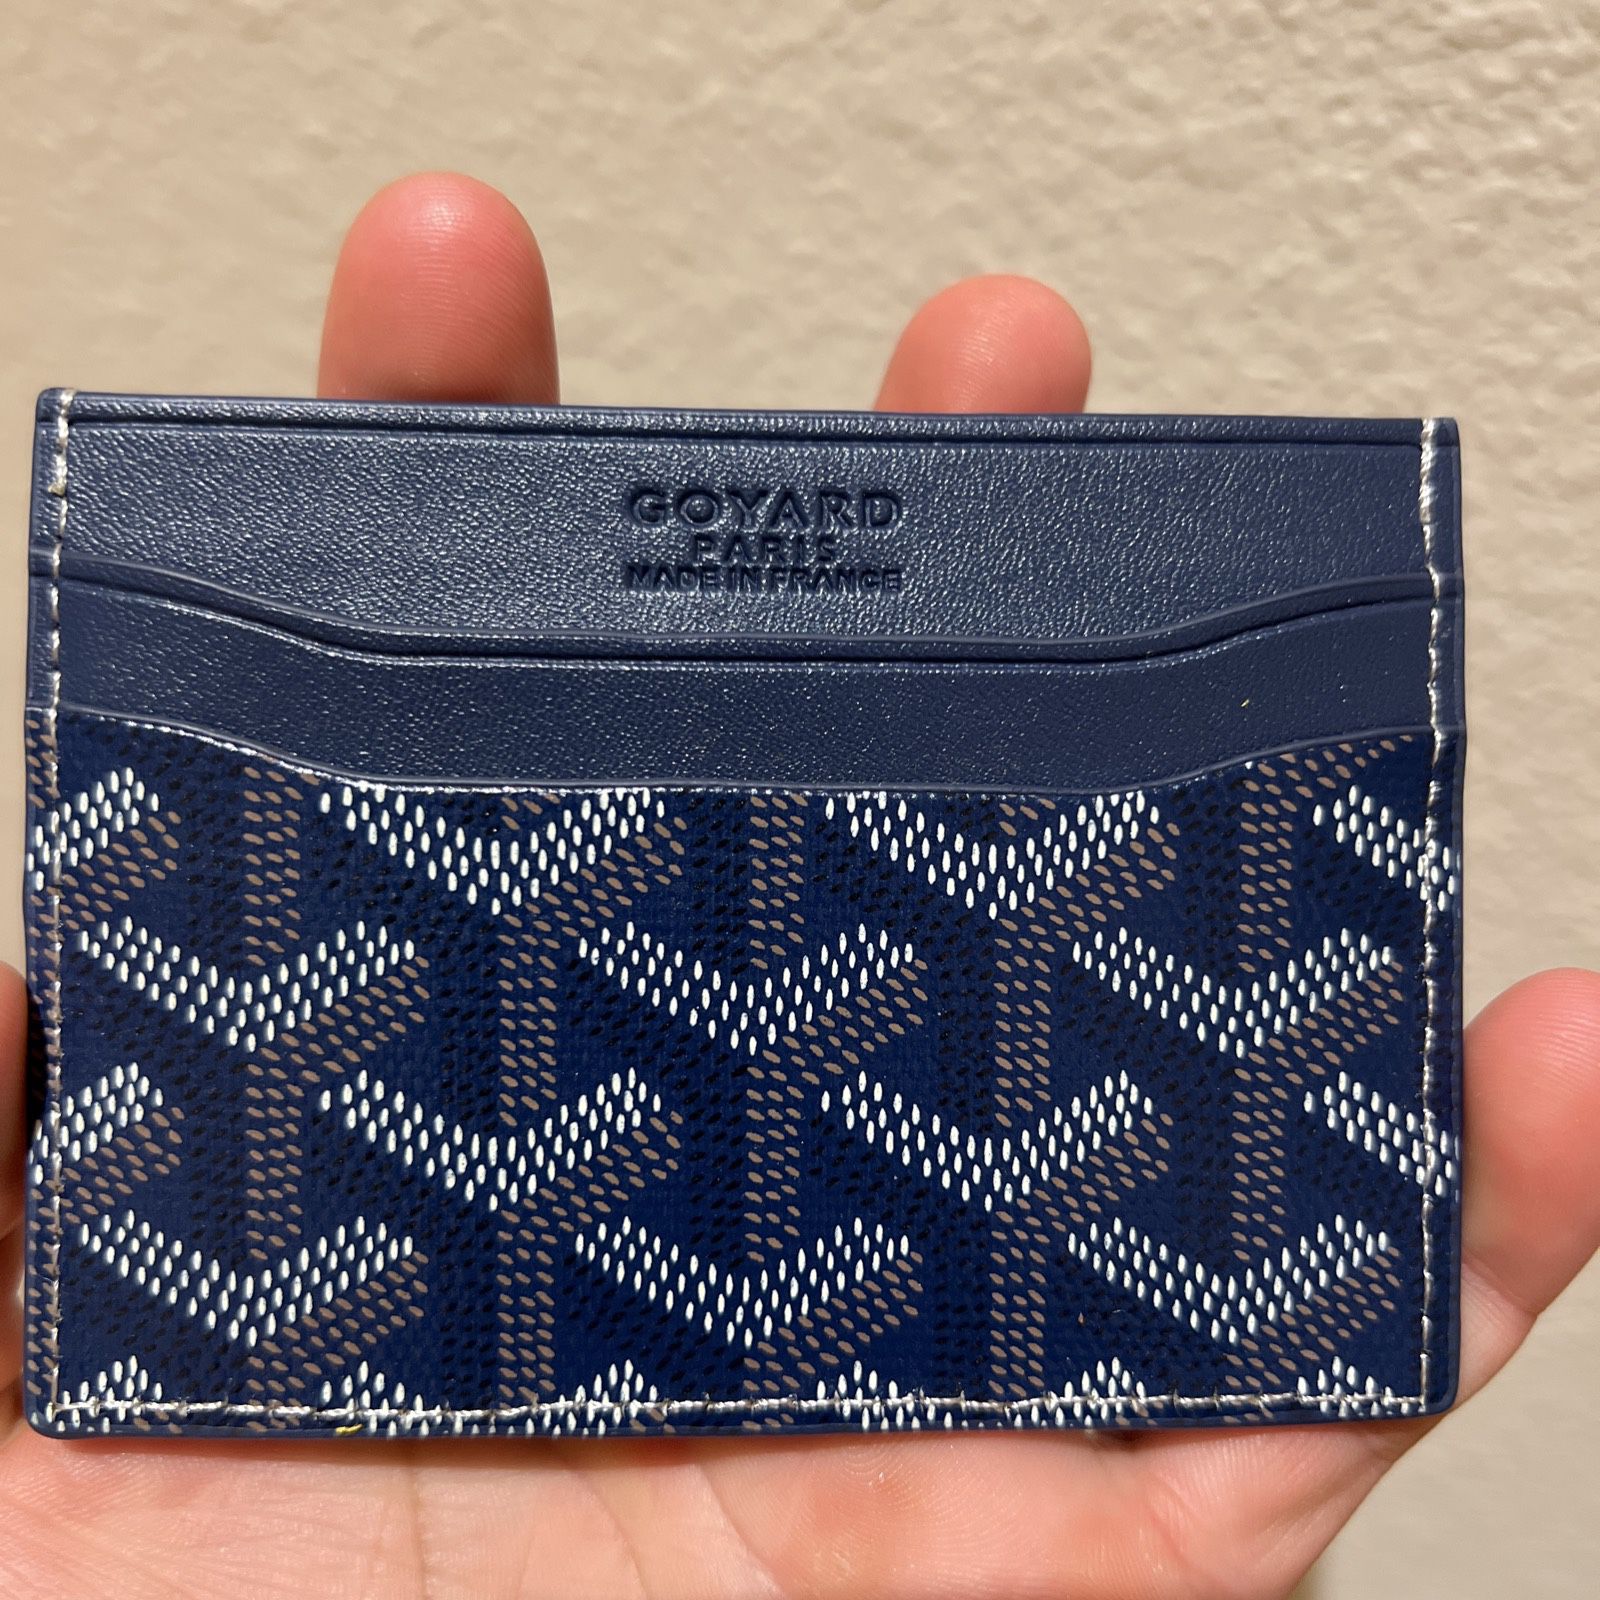 Goyard Card Holder Navy Blue for Sale in San Rafael, CA - OfferUp